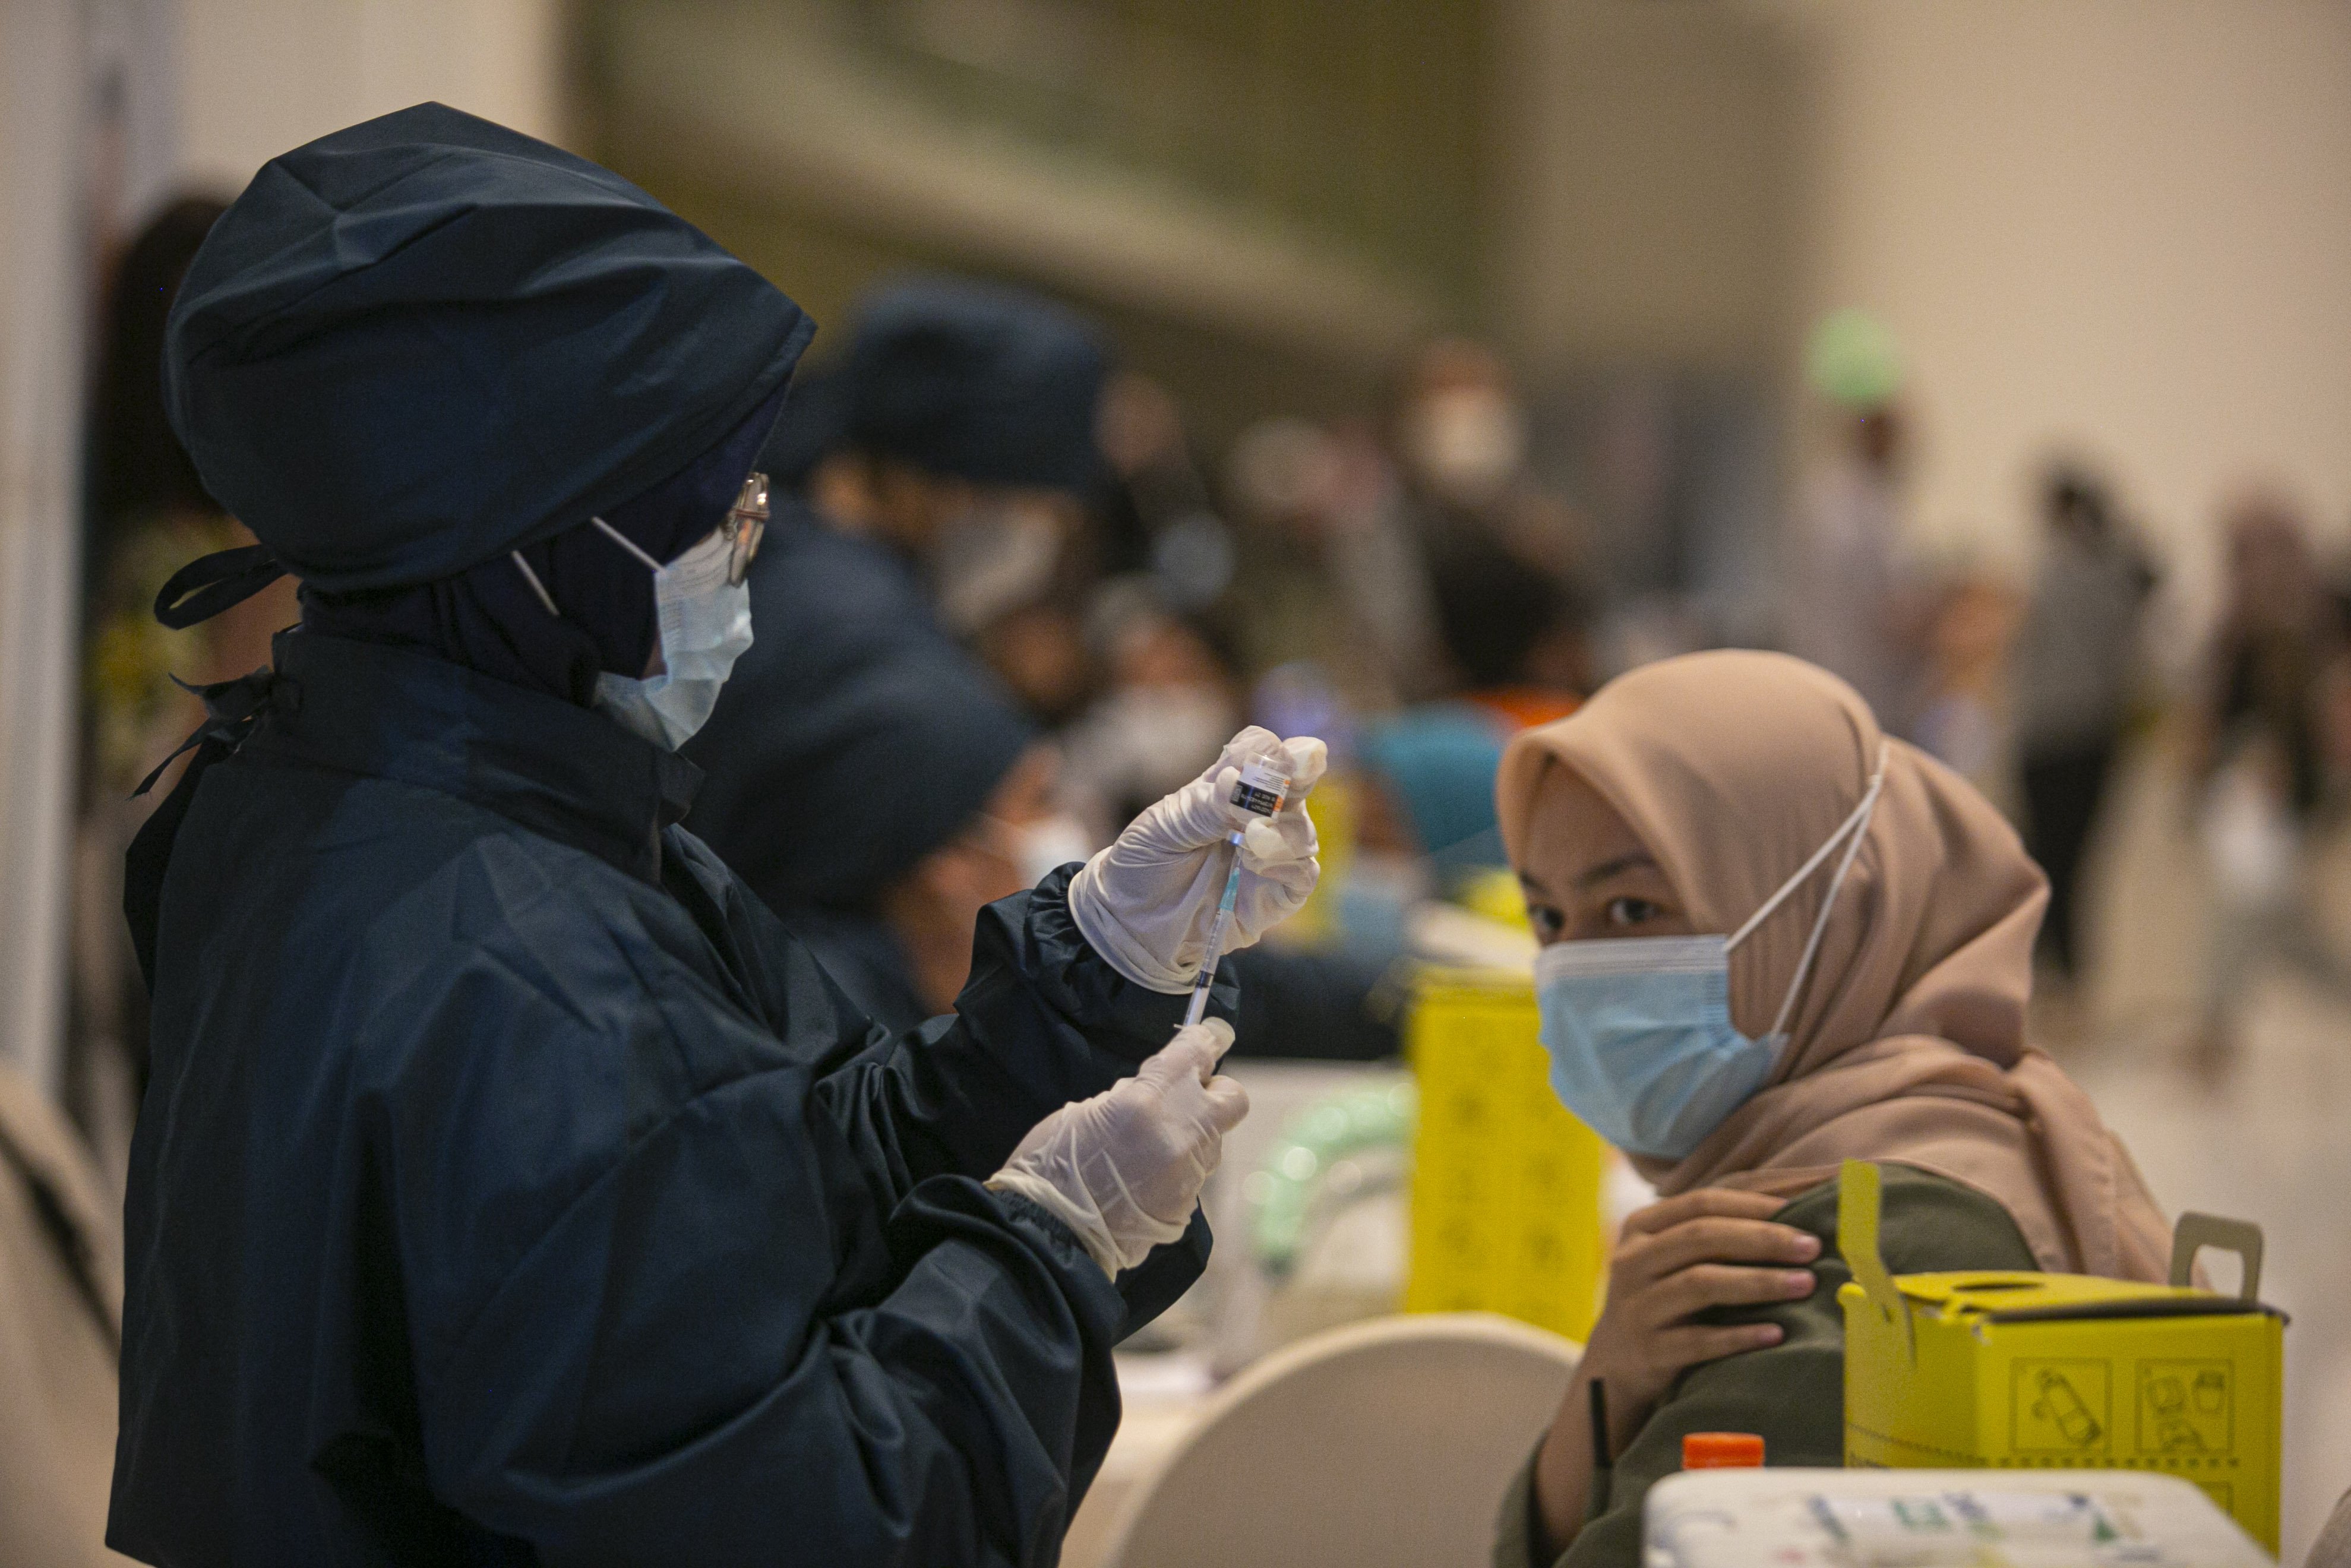 Petugas medis menyiapkan vaksin COVID-19 untuk pelaku UMKM di Ciputra Artpreneur, Jakarta, Kamis (1/4/2021). Kementerian Koperasi dan Usaha Kecil dan Menengah menyelenggarakan vaksinasi COVID-19 massal bagi 1.500 pelaku Usaha mikro kecil menengah (UMKM) di DKI Jakarta dengan target vaksinasi untuk pelaku UMKM tersebut mencapai 250.000 orang.